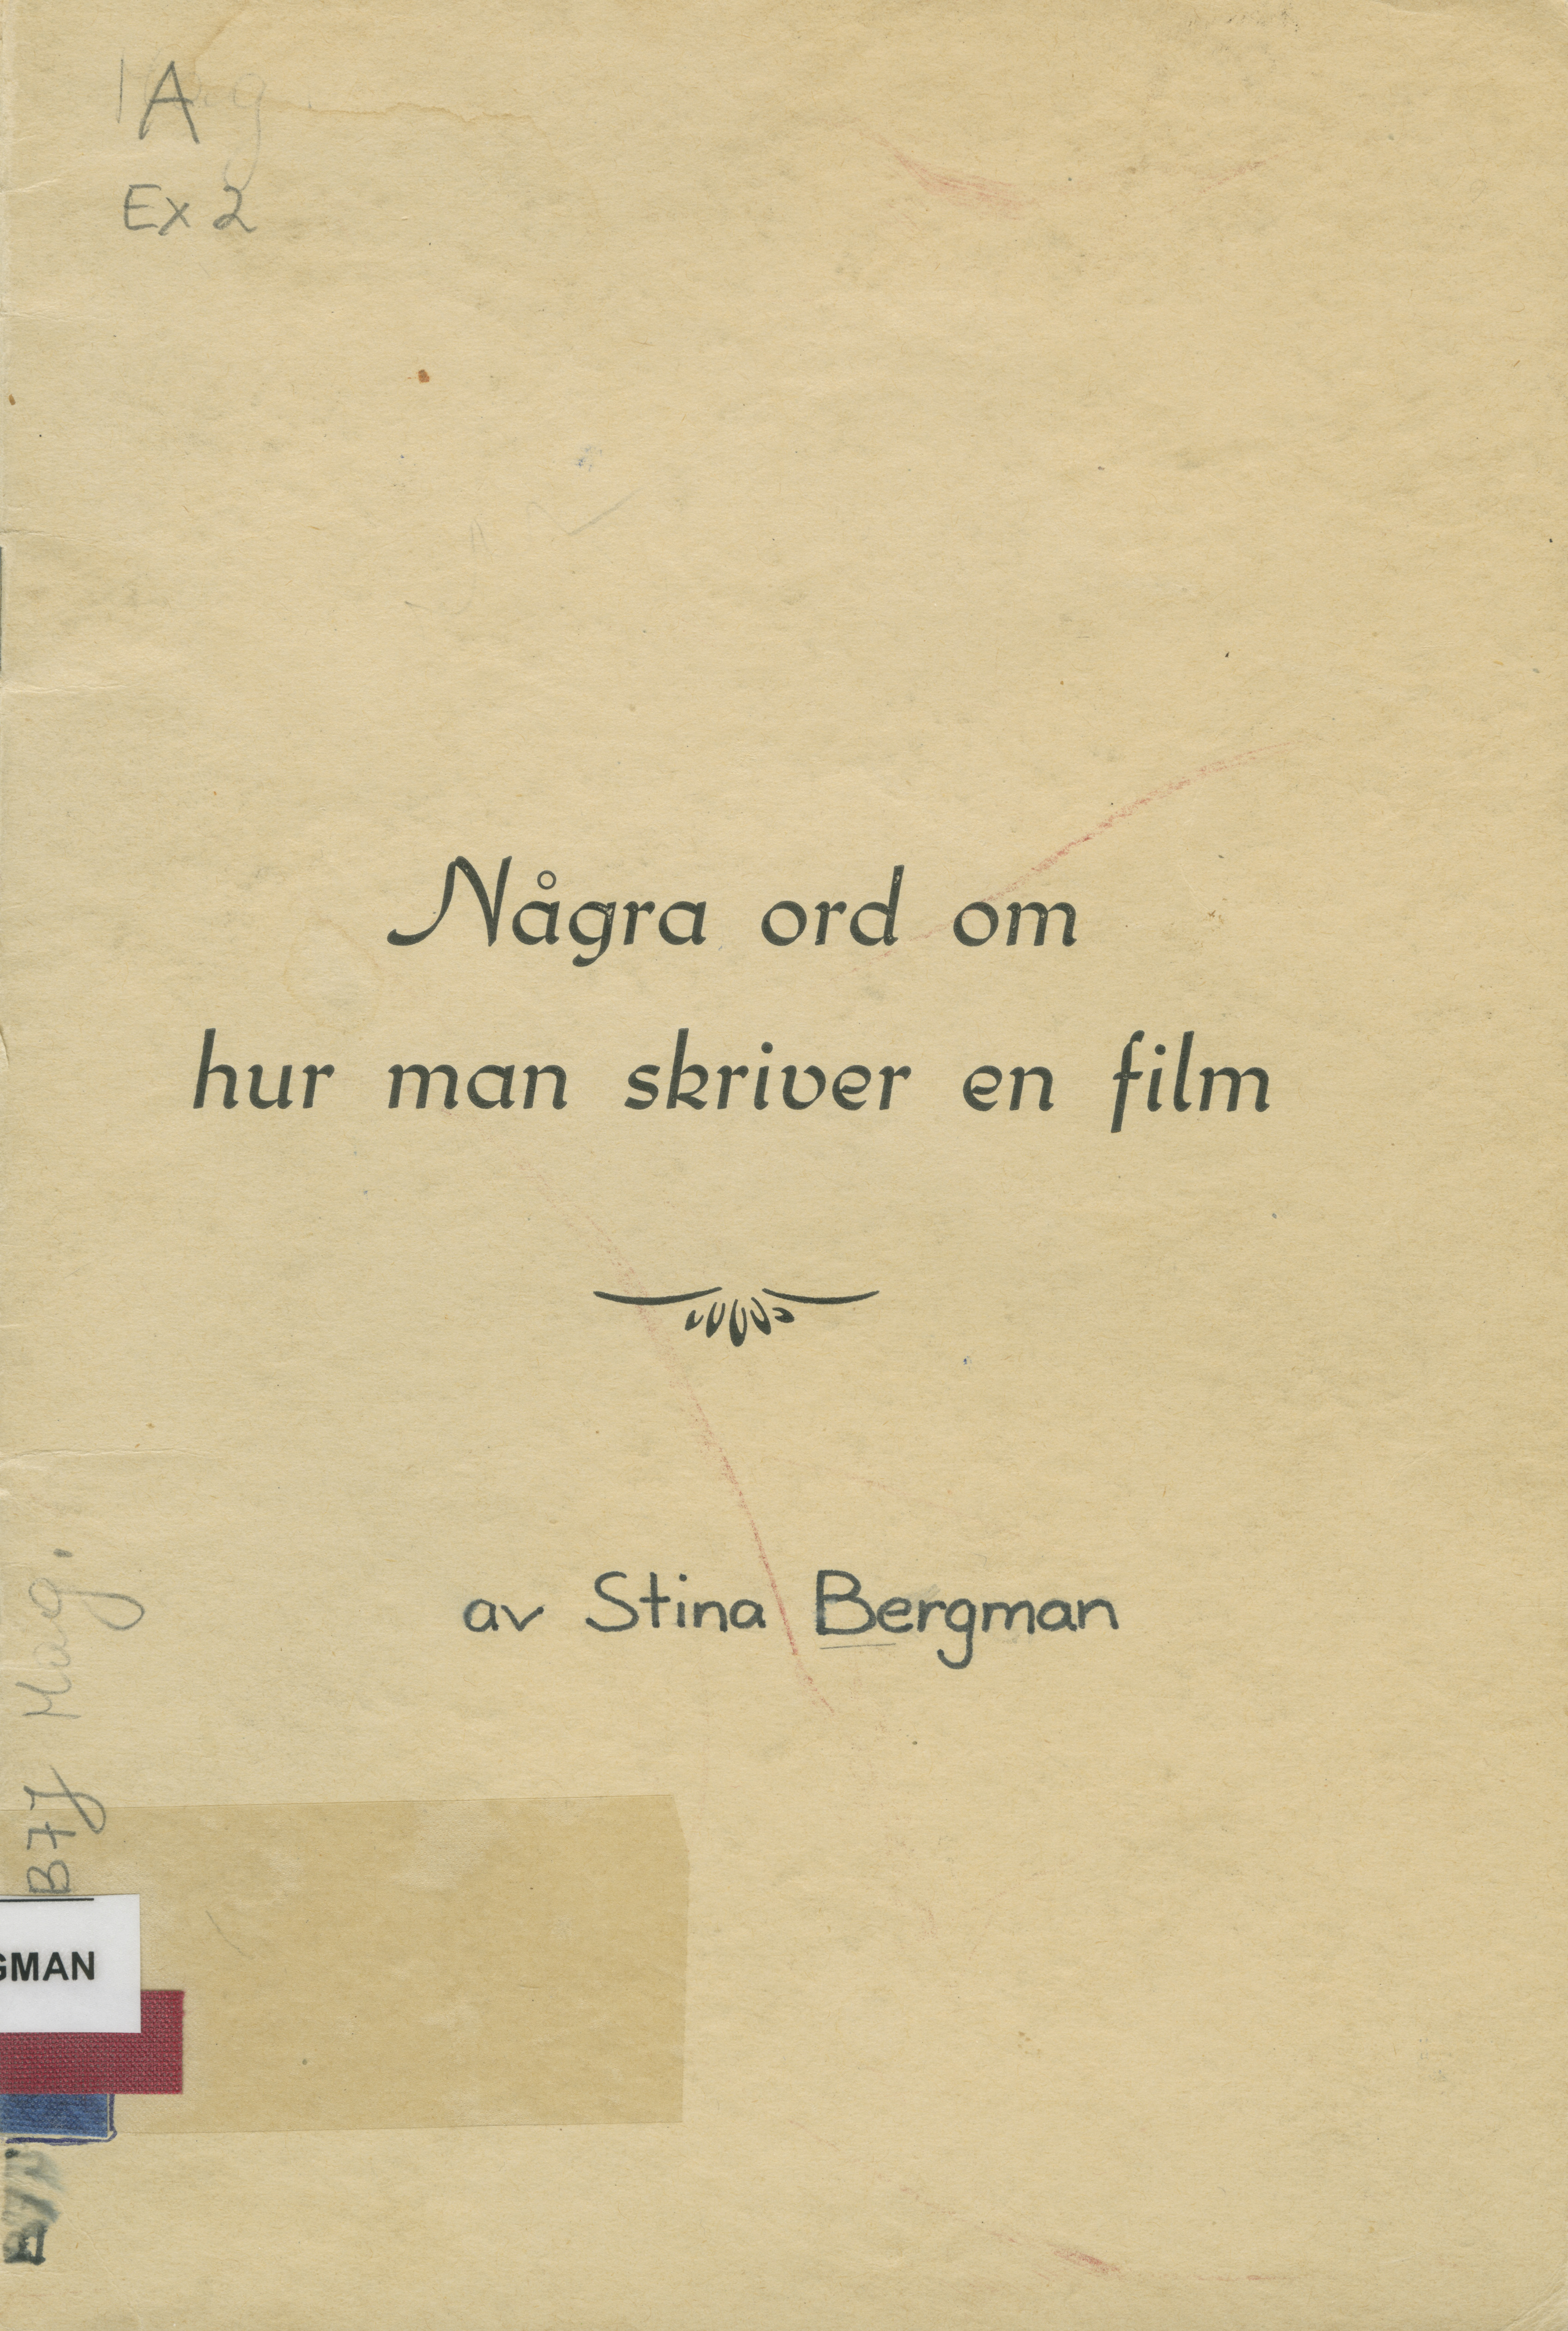 Stina Bergman